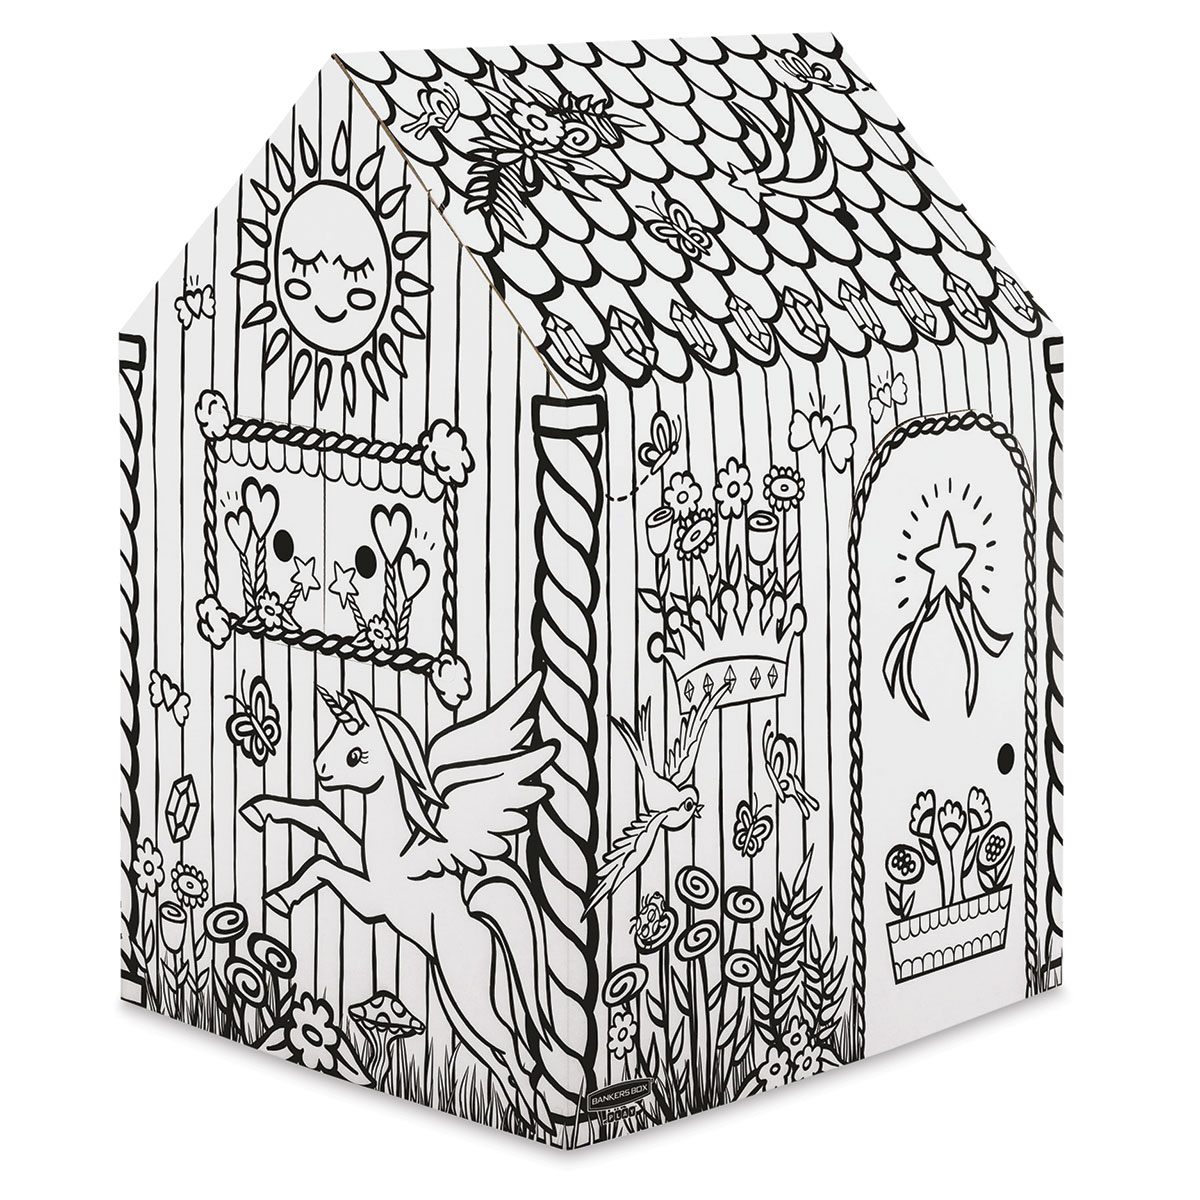 Bankers Box Cardboard Playhouse - Unicorn